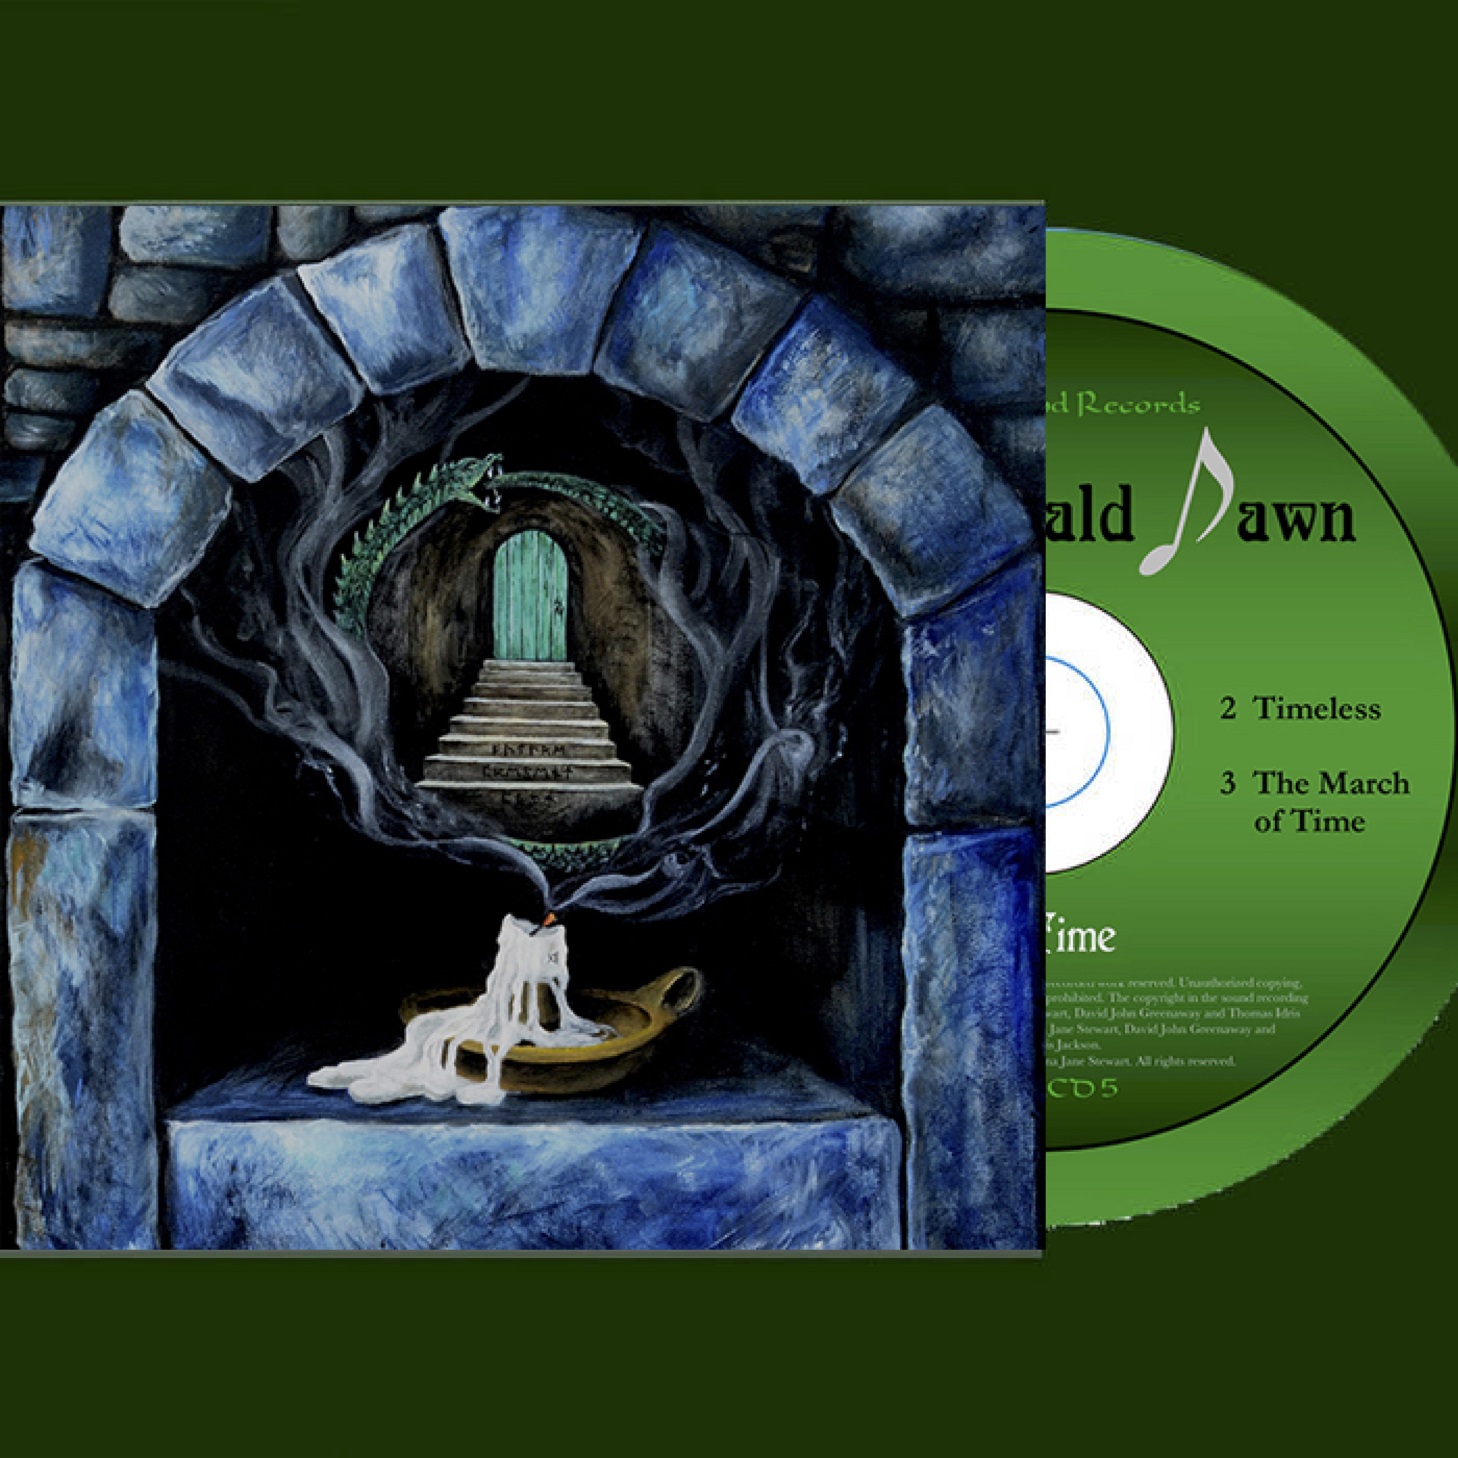 The Emerald Dawn – "In Time"